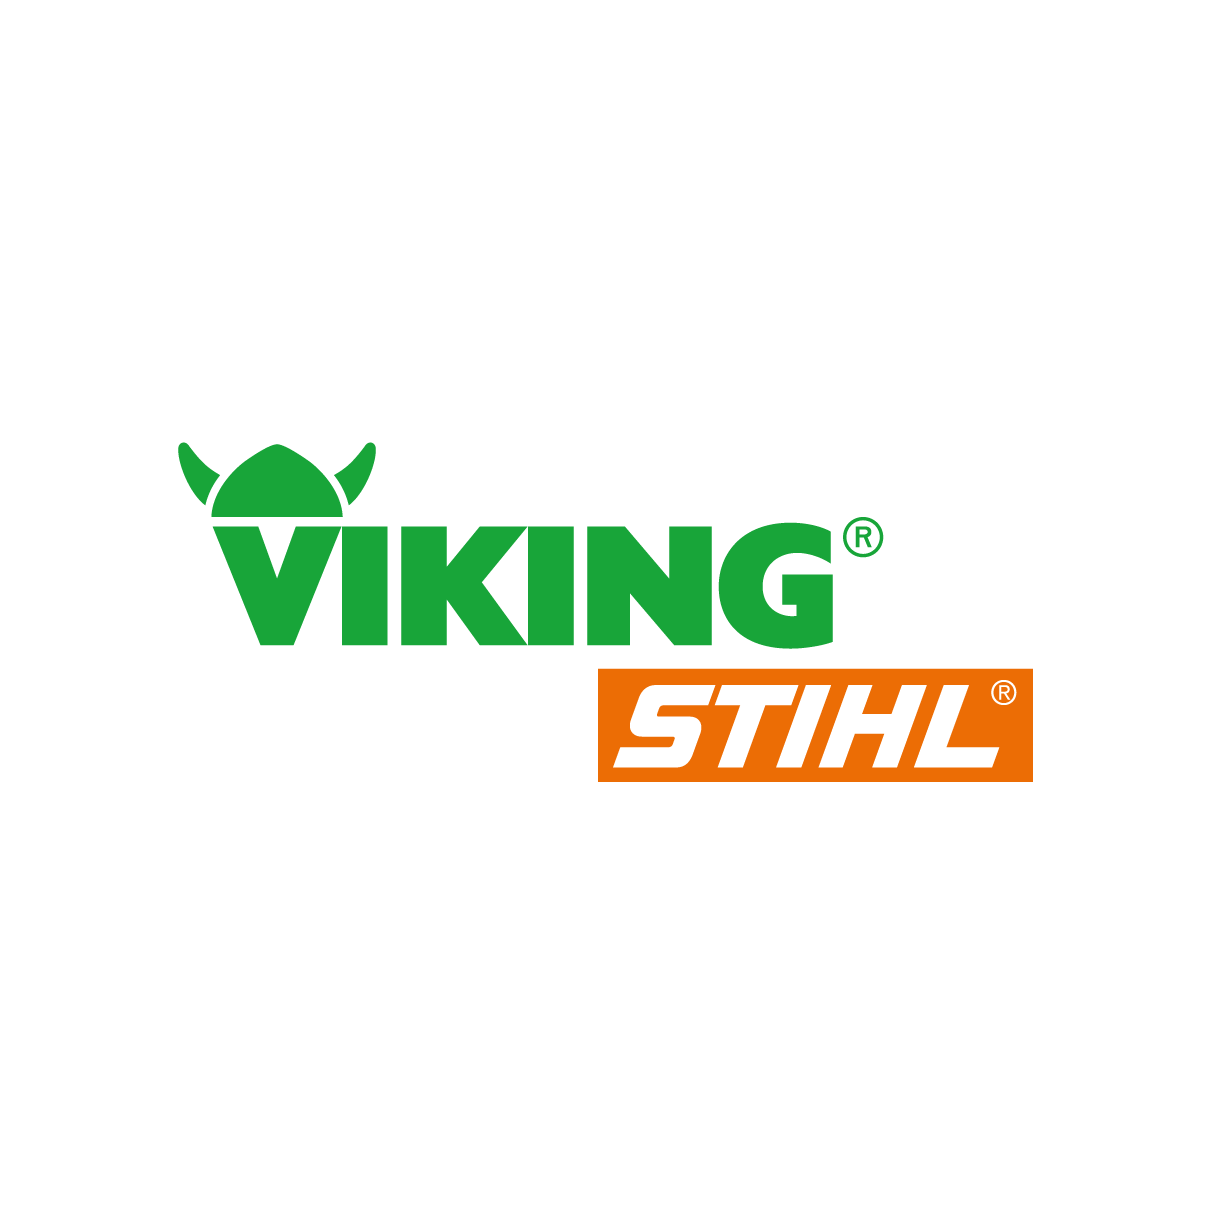 Stihl-Viking